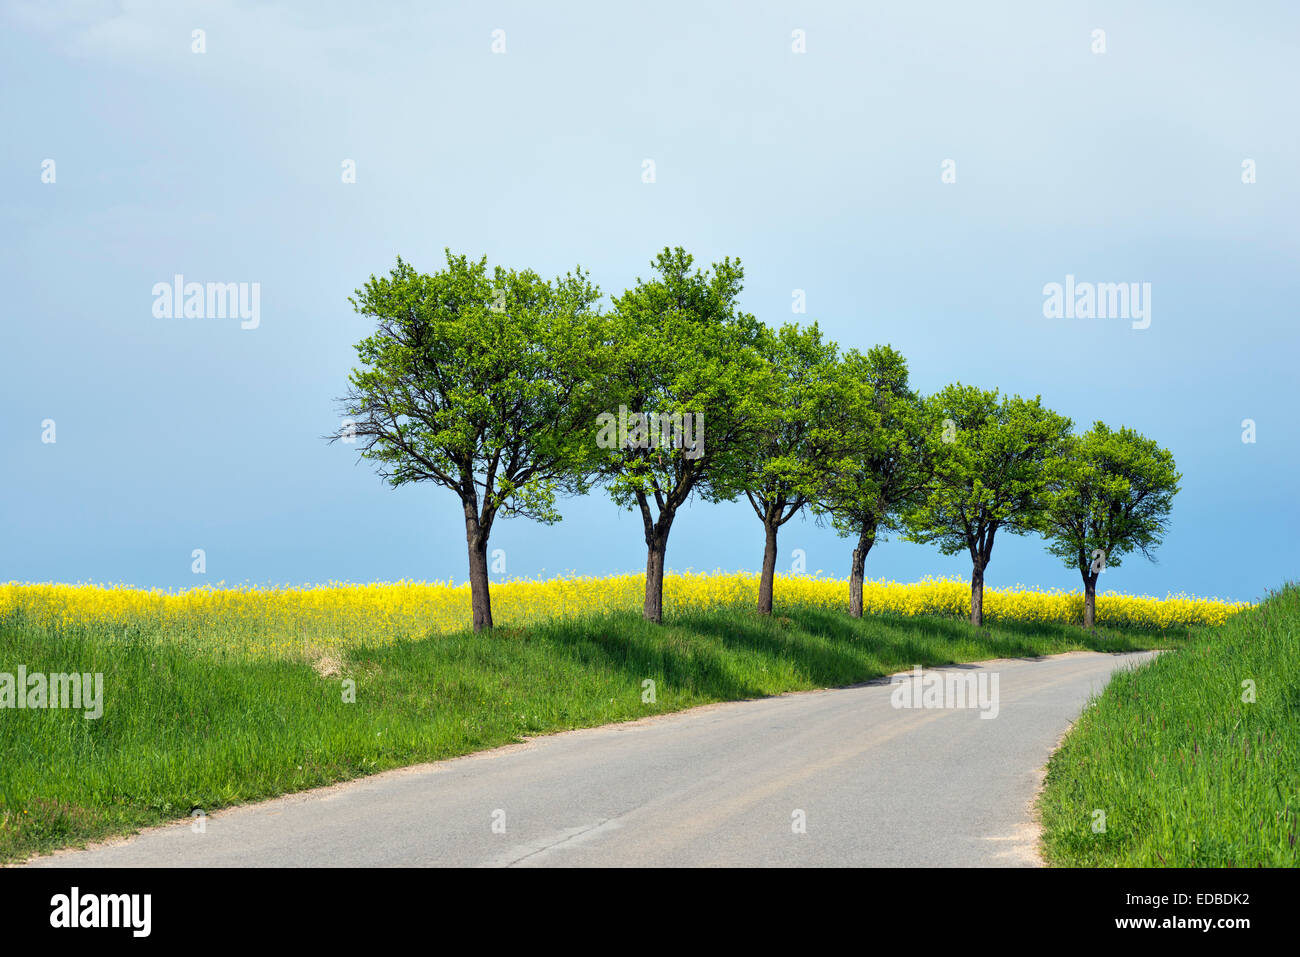 Road and trees, Louka, Hodonin district, Jihomoravsky county, South Moravia, Czech Republic Stock Photo